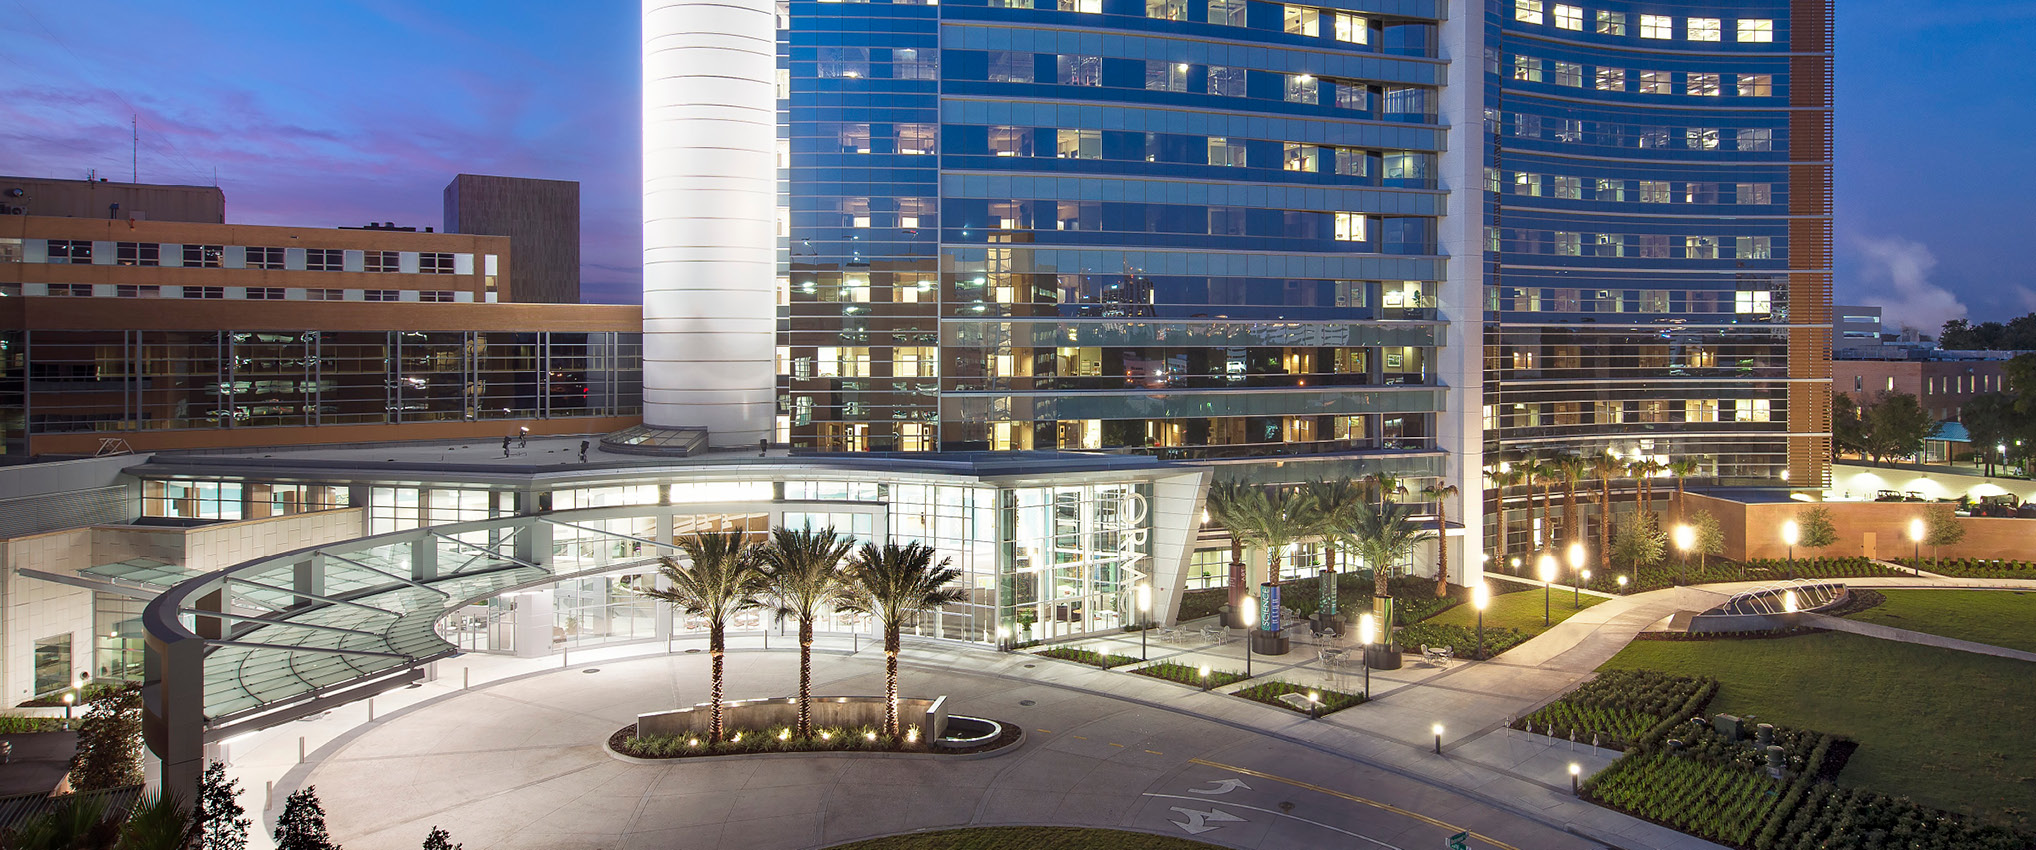 HKS Receives 2015 Built Award of Honor for Orlando Regional Medical Center North Tower